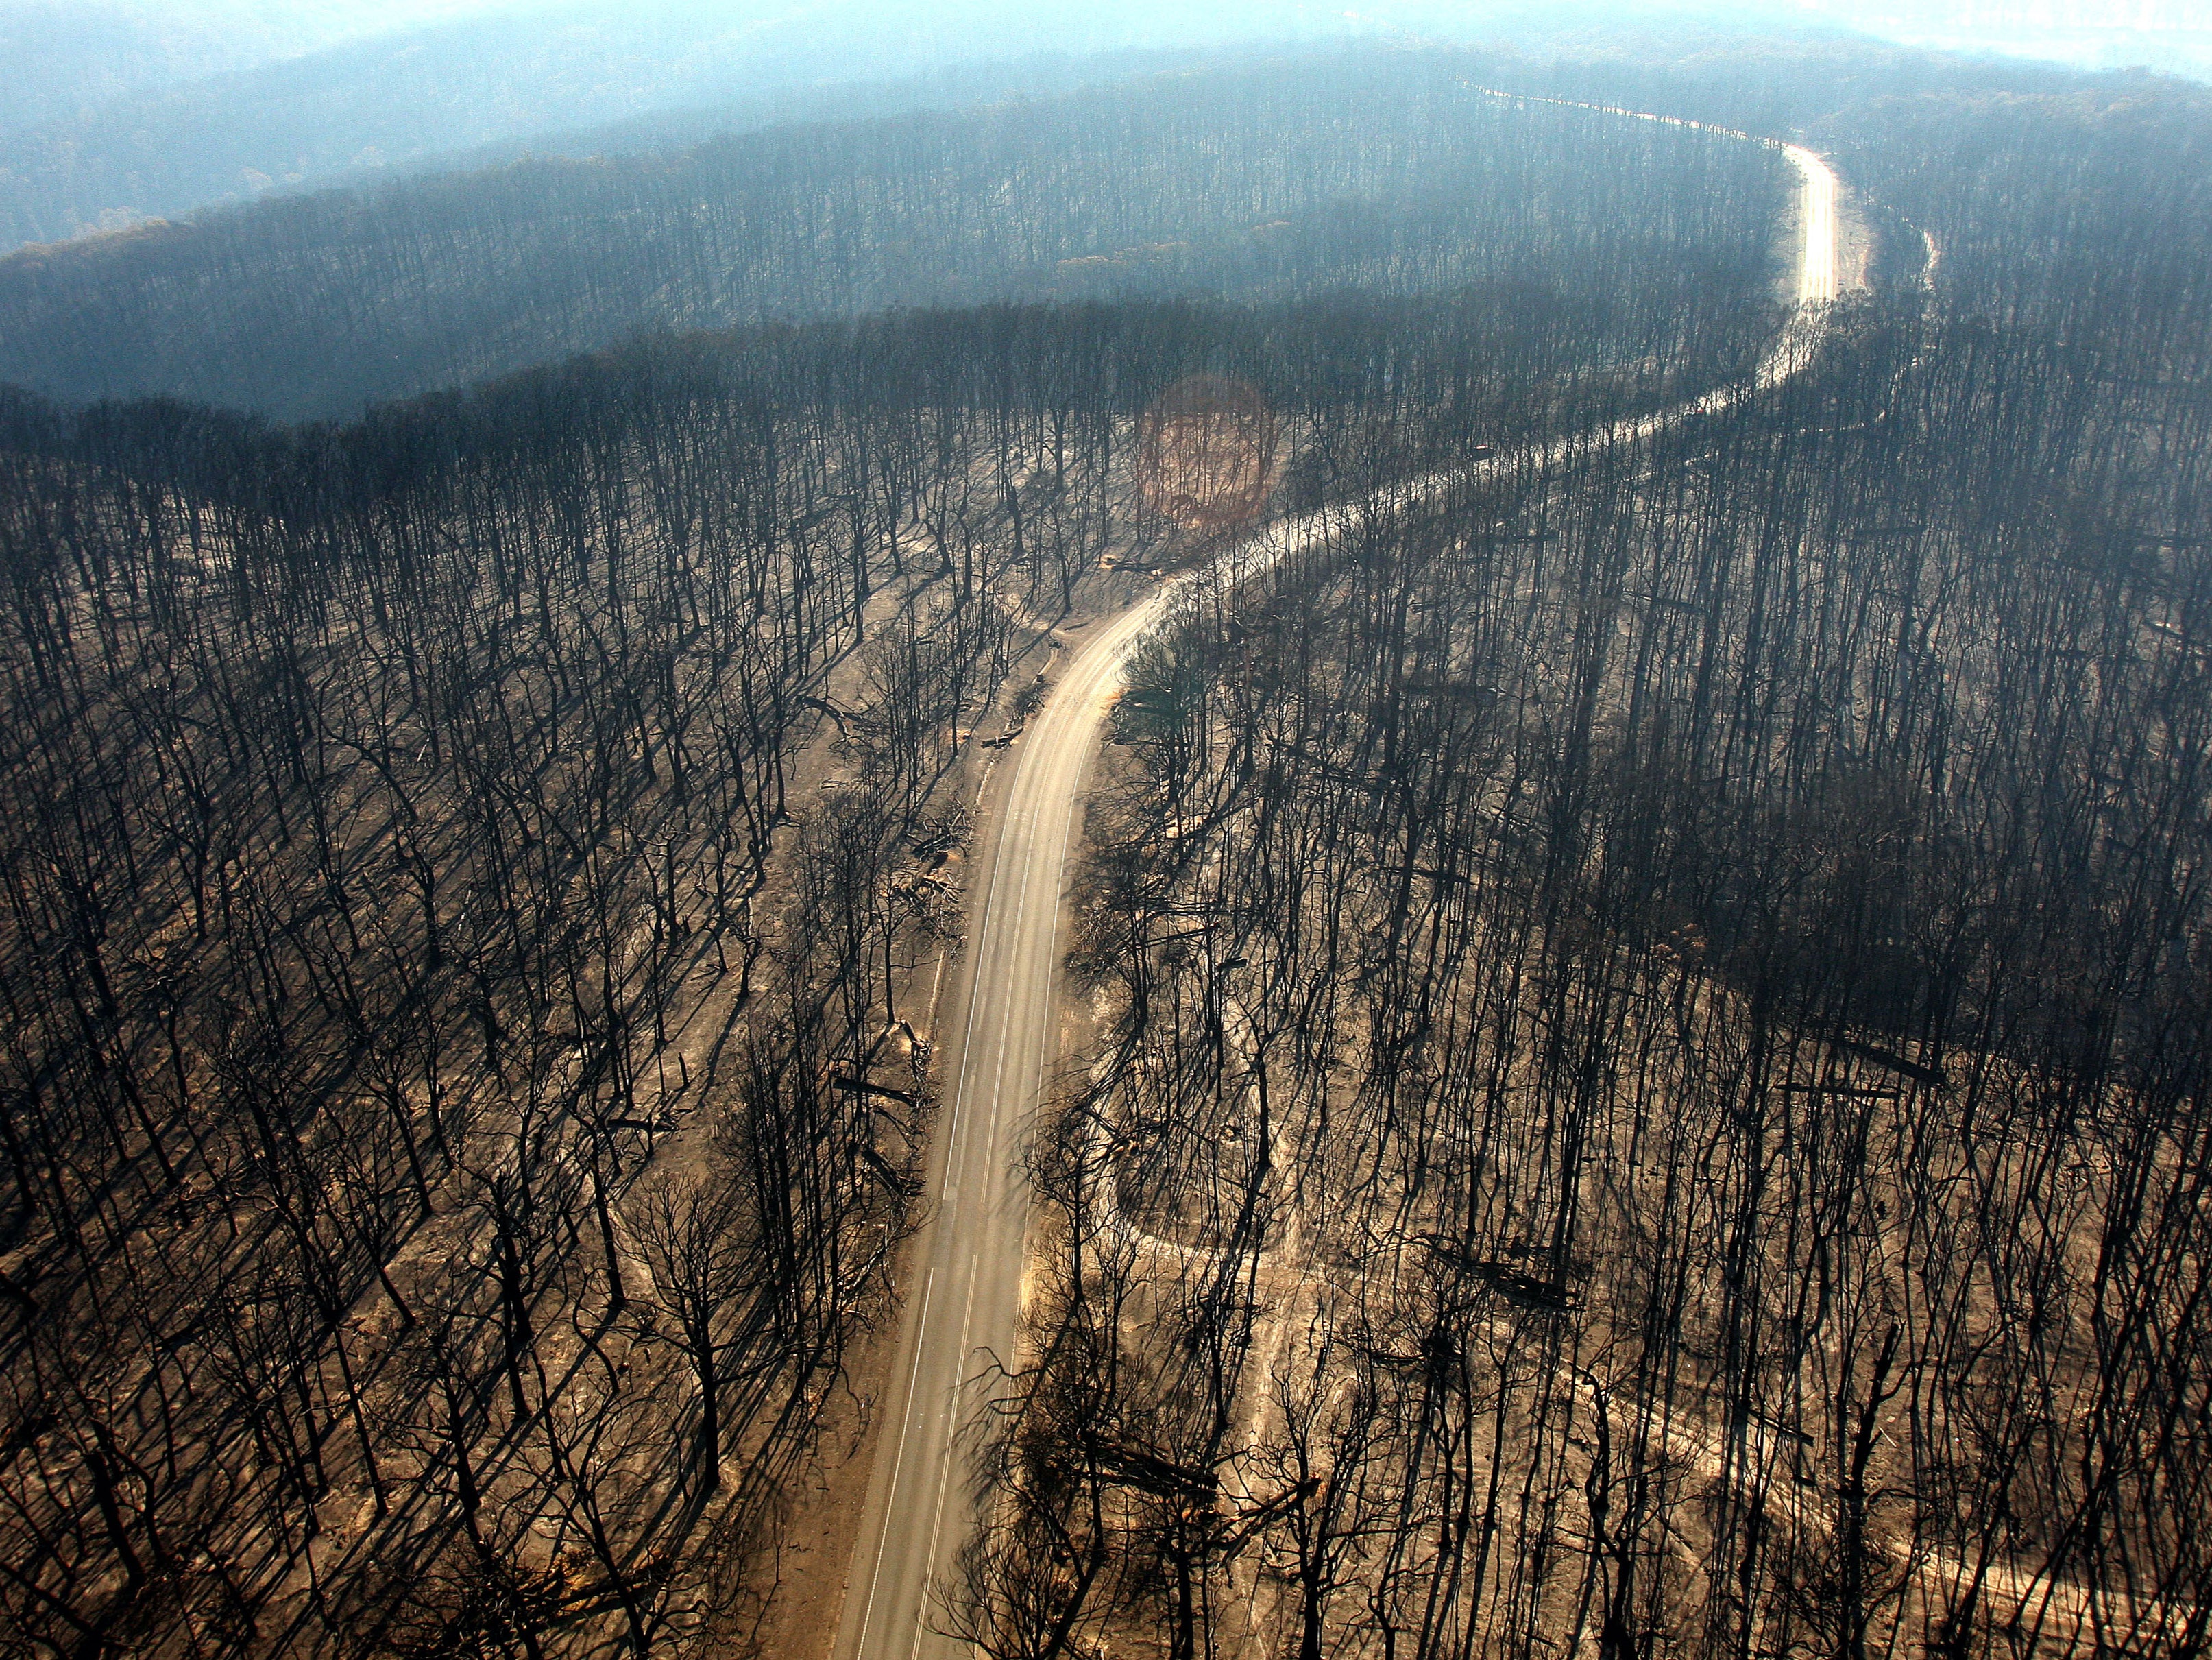 Devastation caused by wildfires in Australia